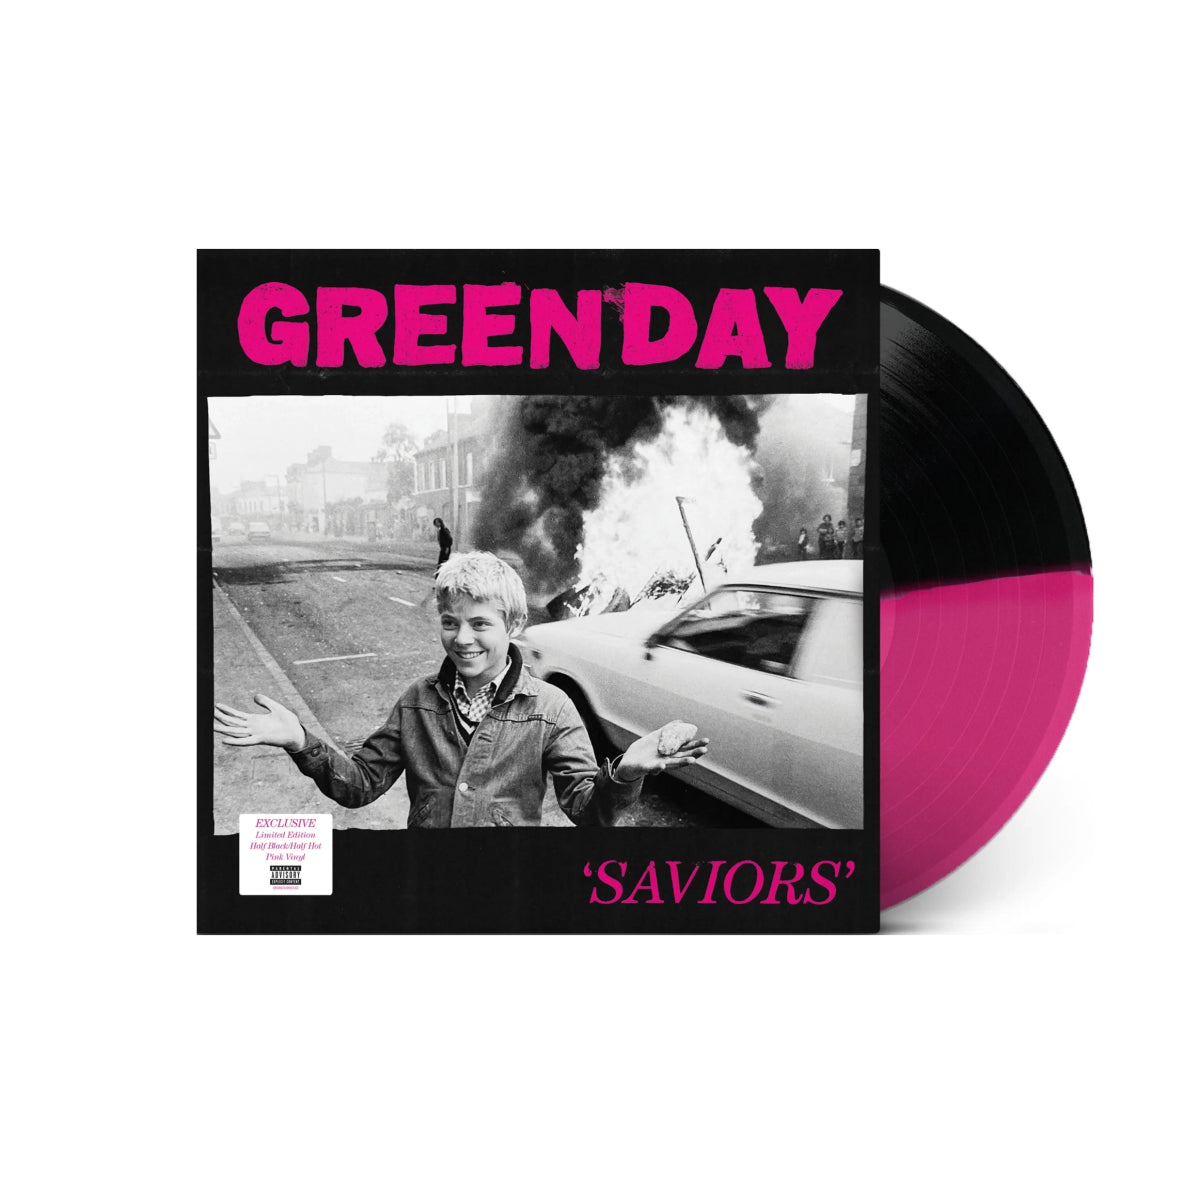 Green Day - Saviors Vinyl